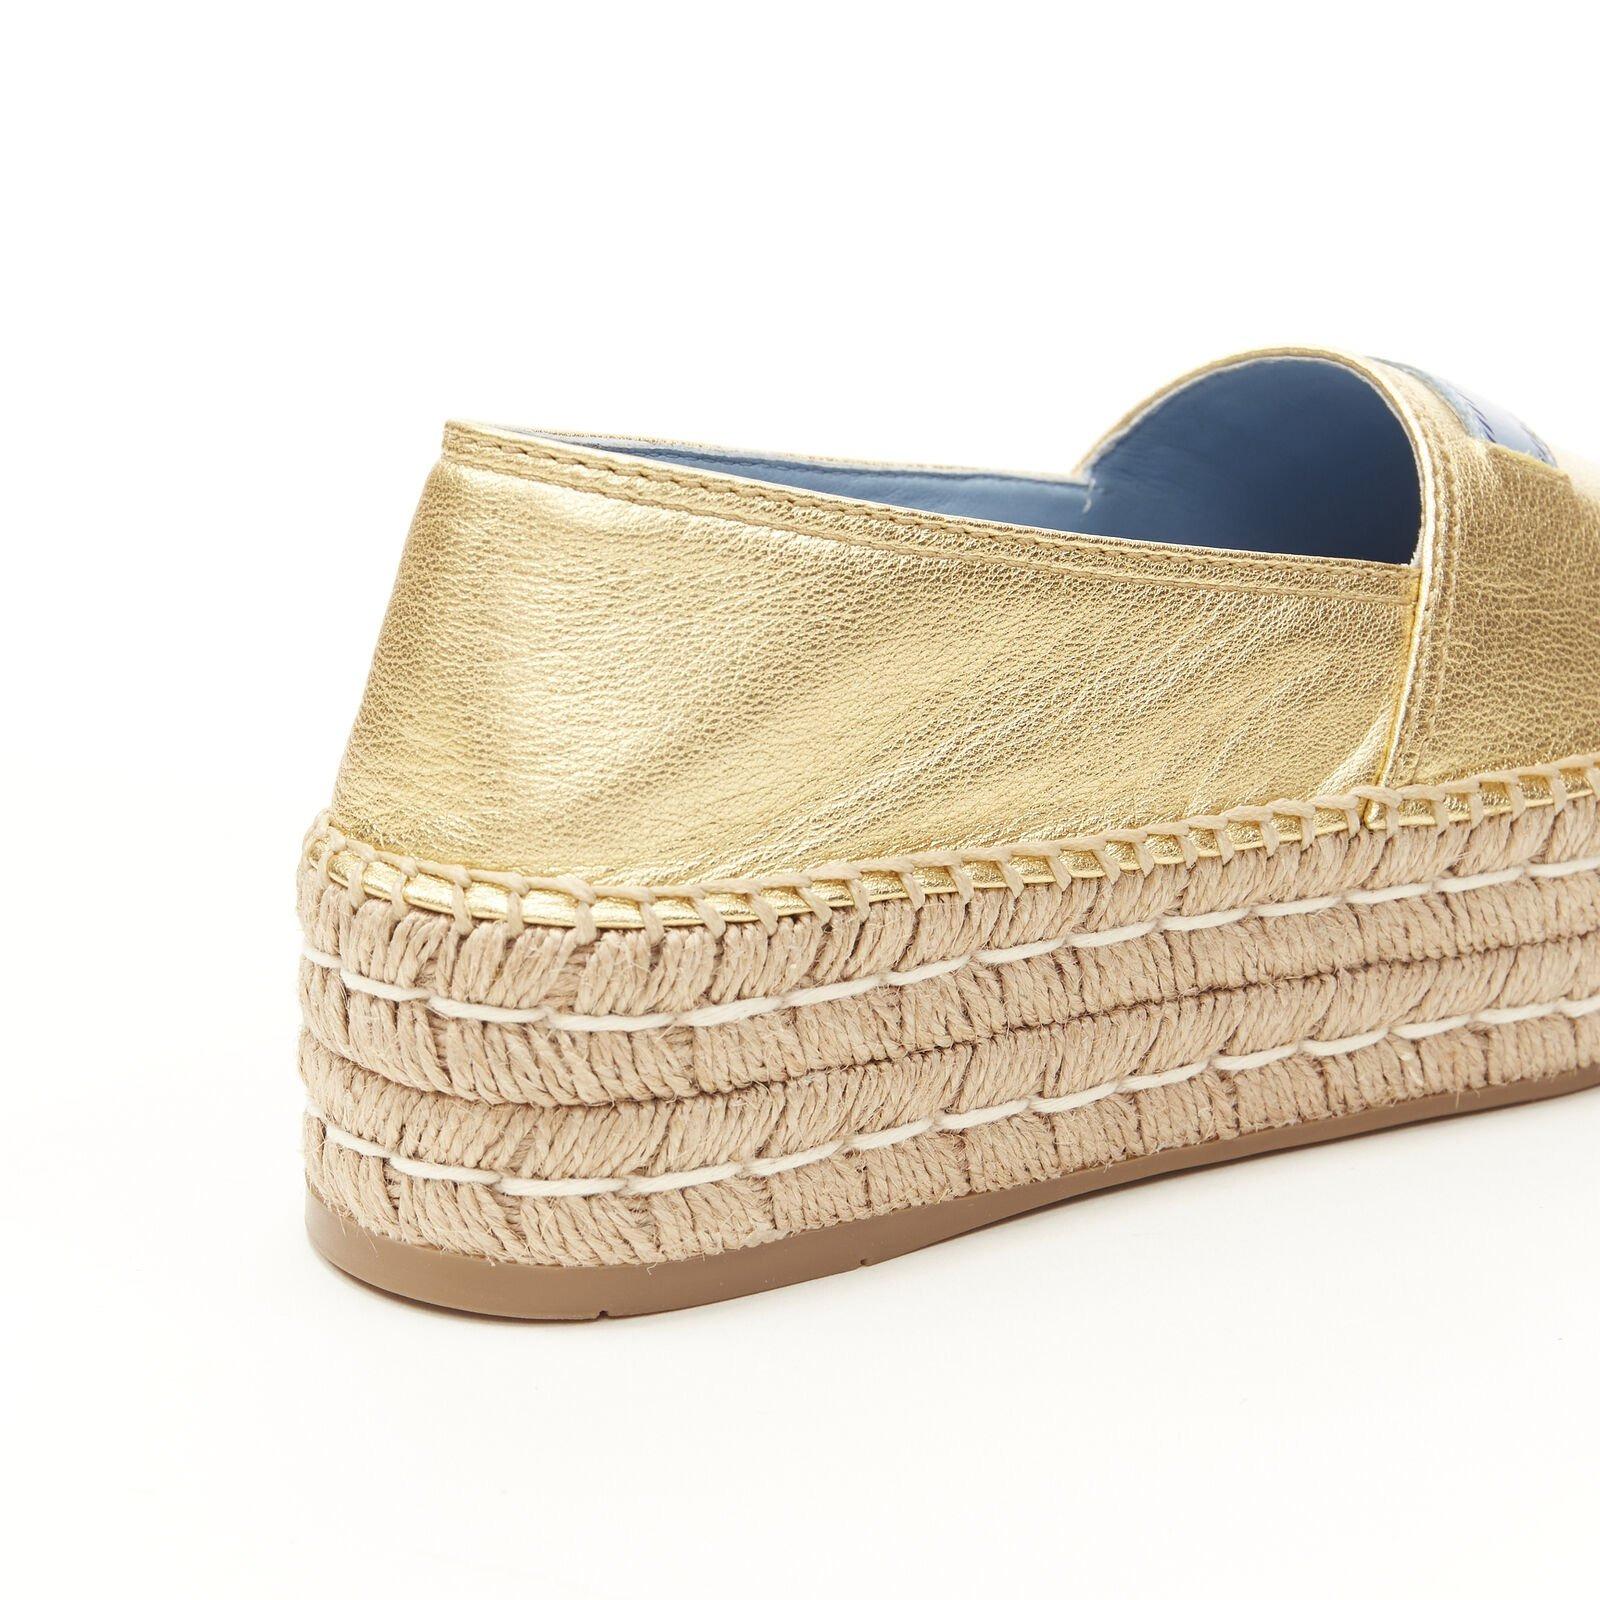 new PRADA metallic gold leather logo peep toe jute platform espadrille shoe EU37 4